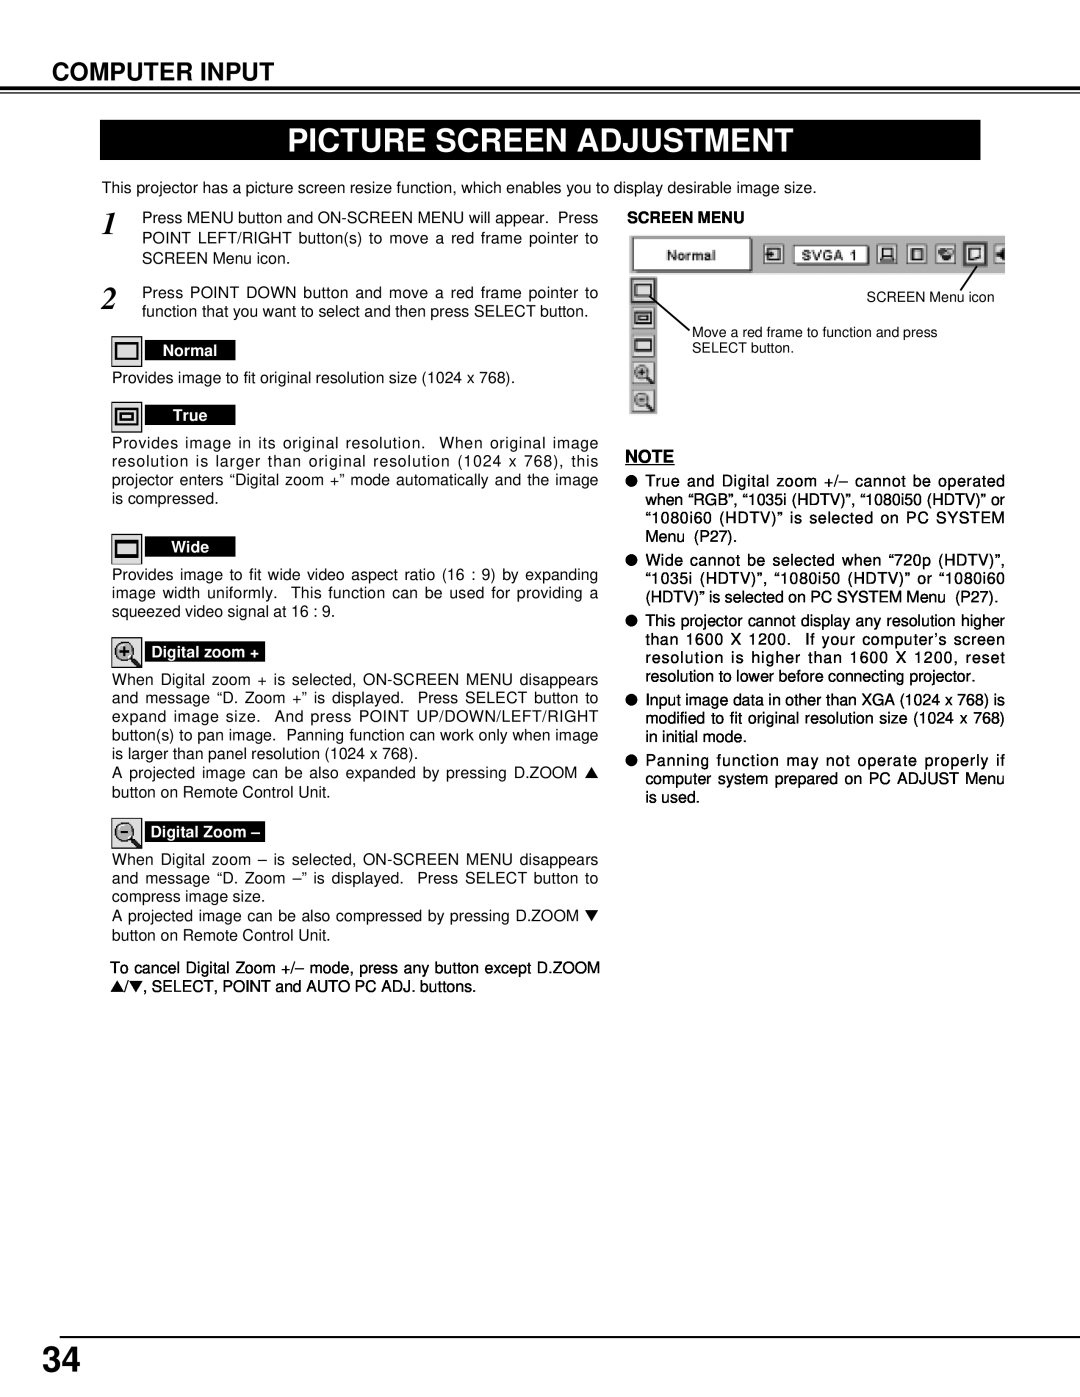 Eiki LC-XT2 instruction manual Picture Screen Adjustment, Screen Menu 